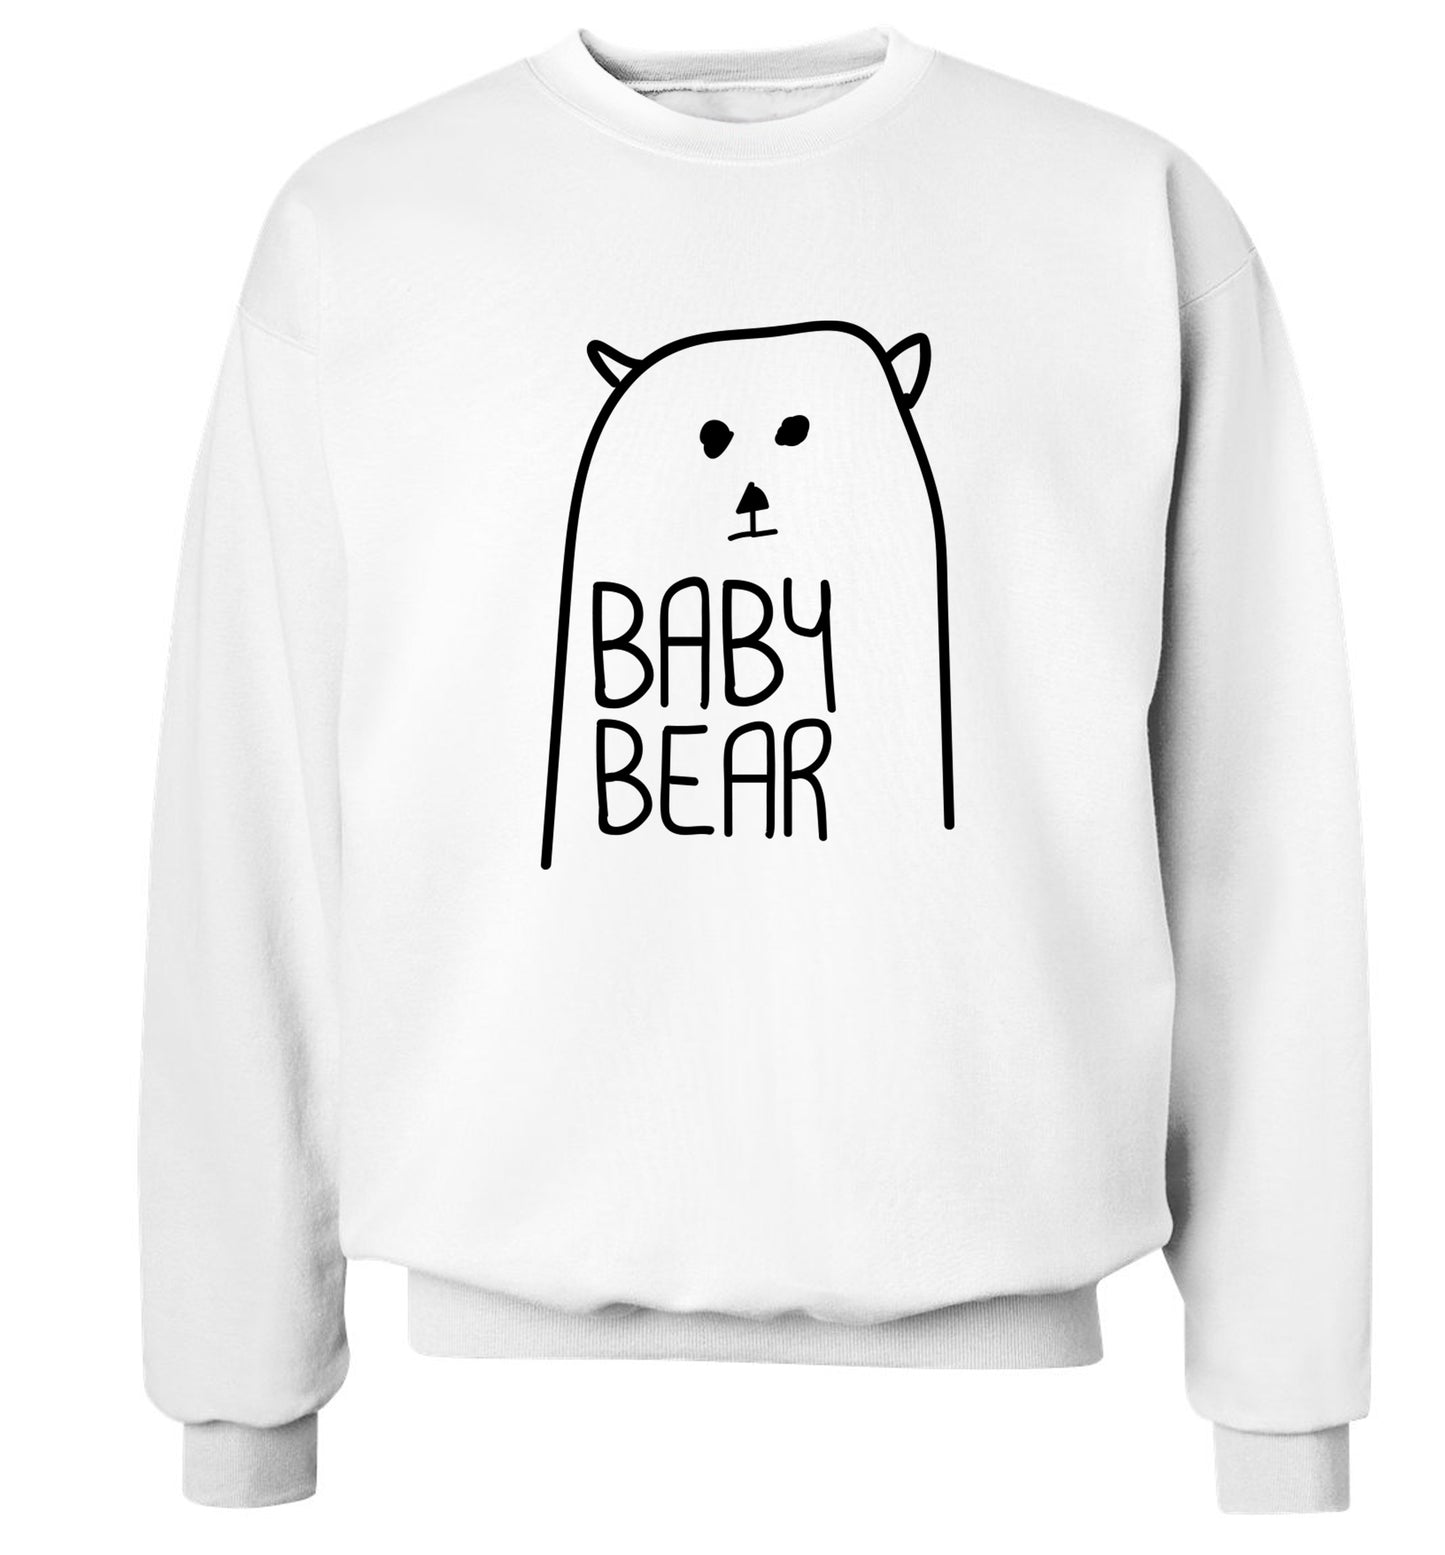 Baby bear Adult's unisex white Sweater 2XL